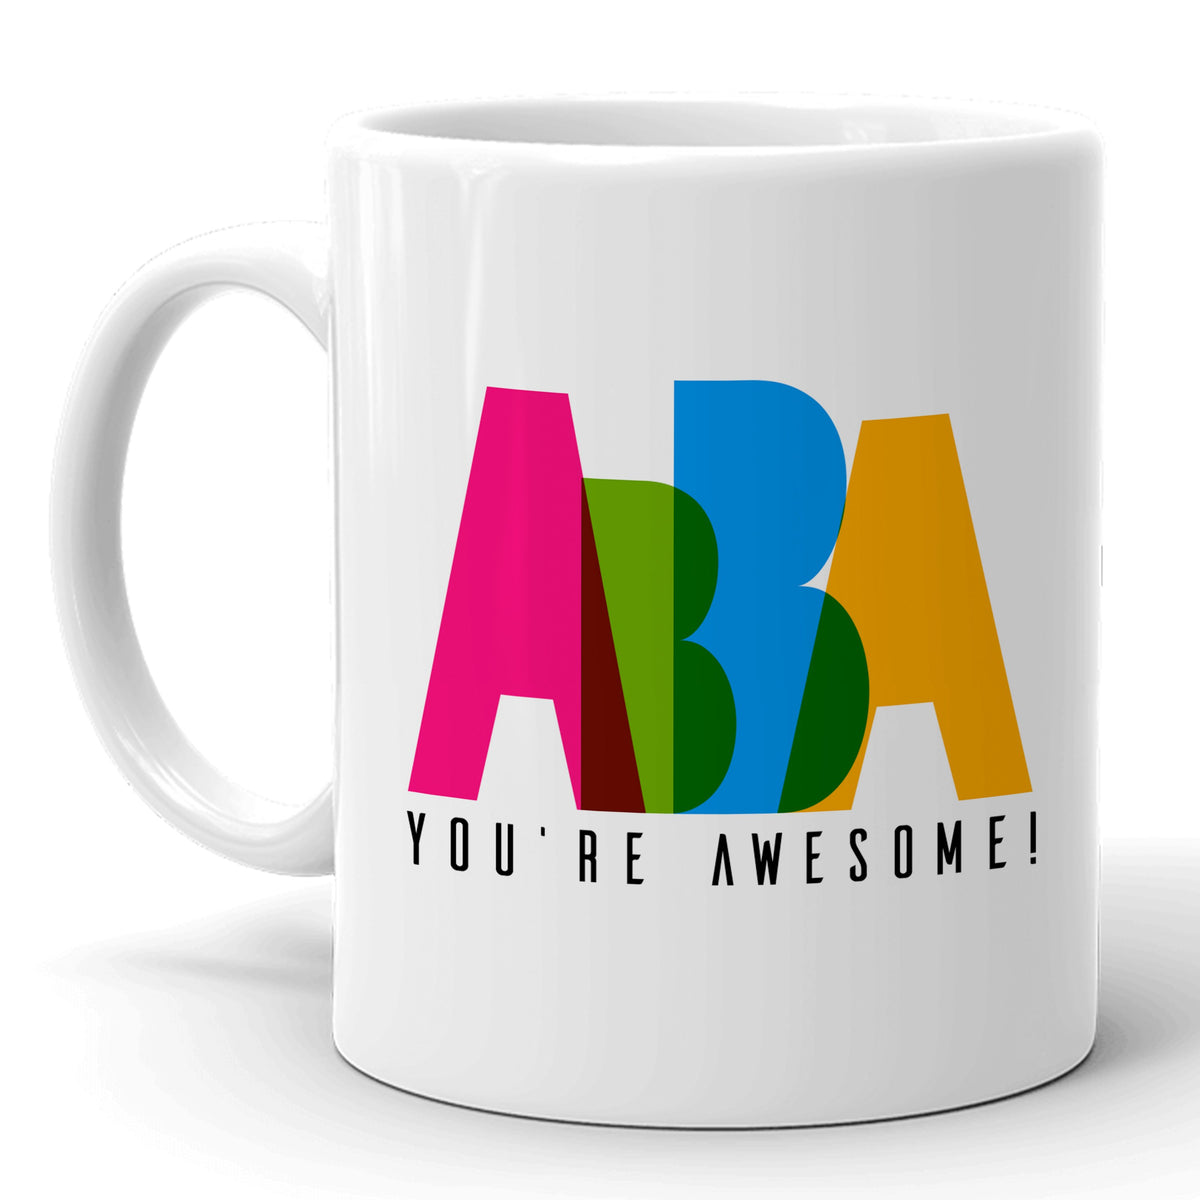 Abba You're Awesome Mug